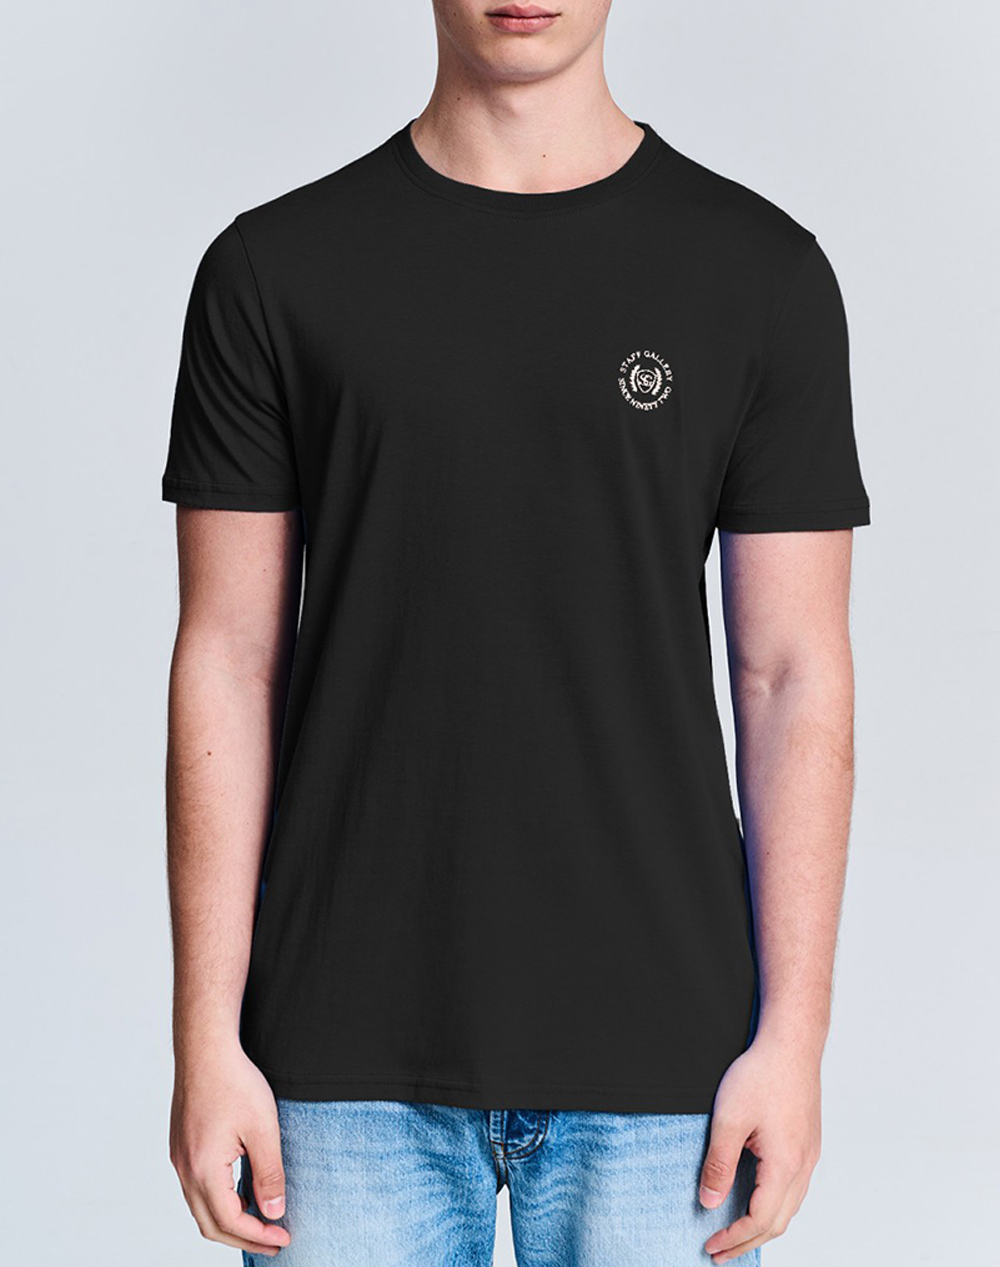 STAFF Ale Man T-Shirt Short Sleeve 100% Co 64-001.051-Ν0090 Black 3820PSTAF3400216_2596